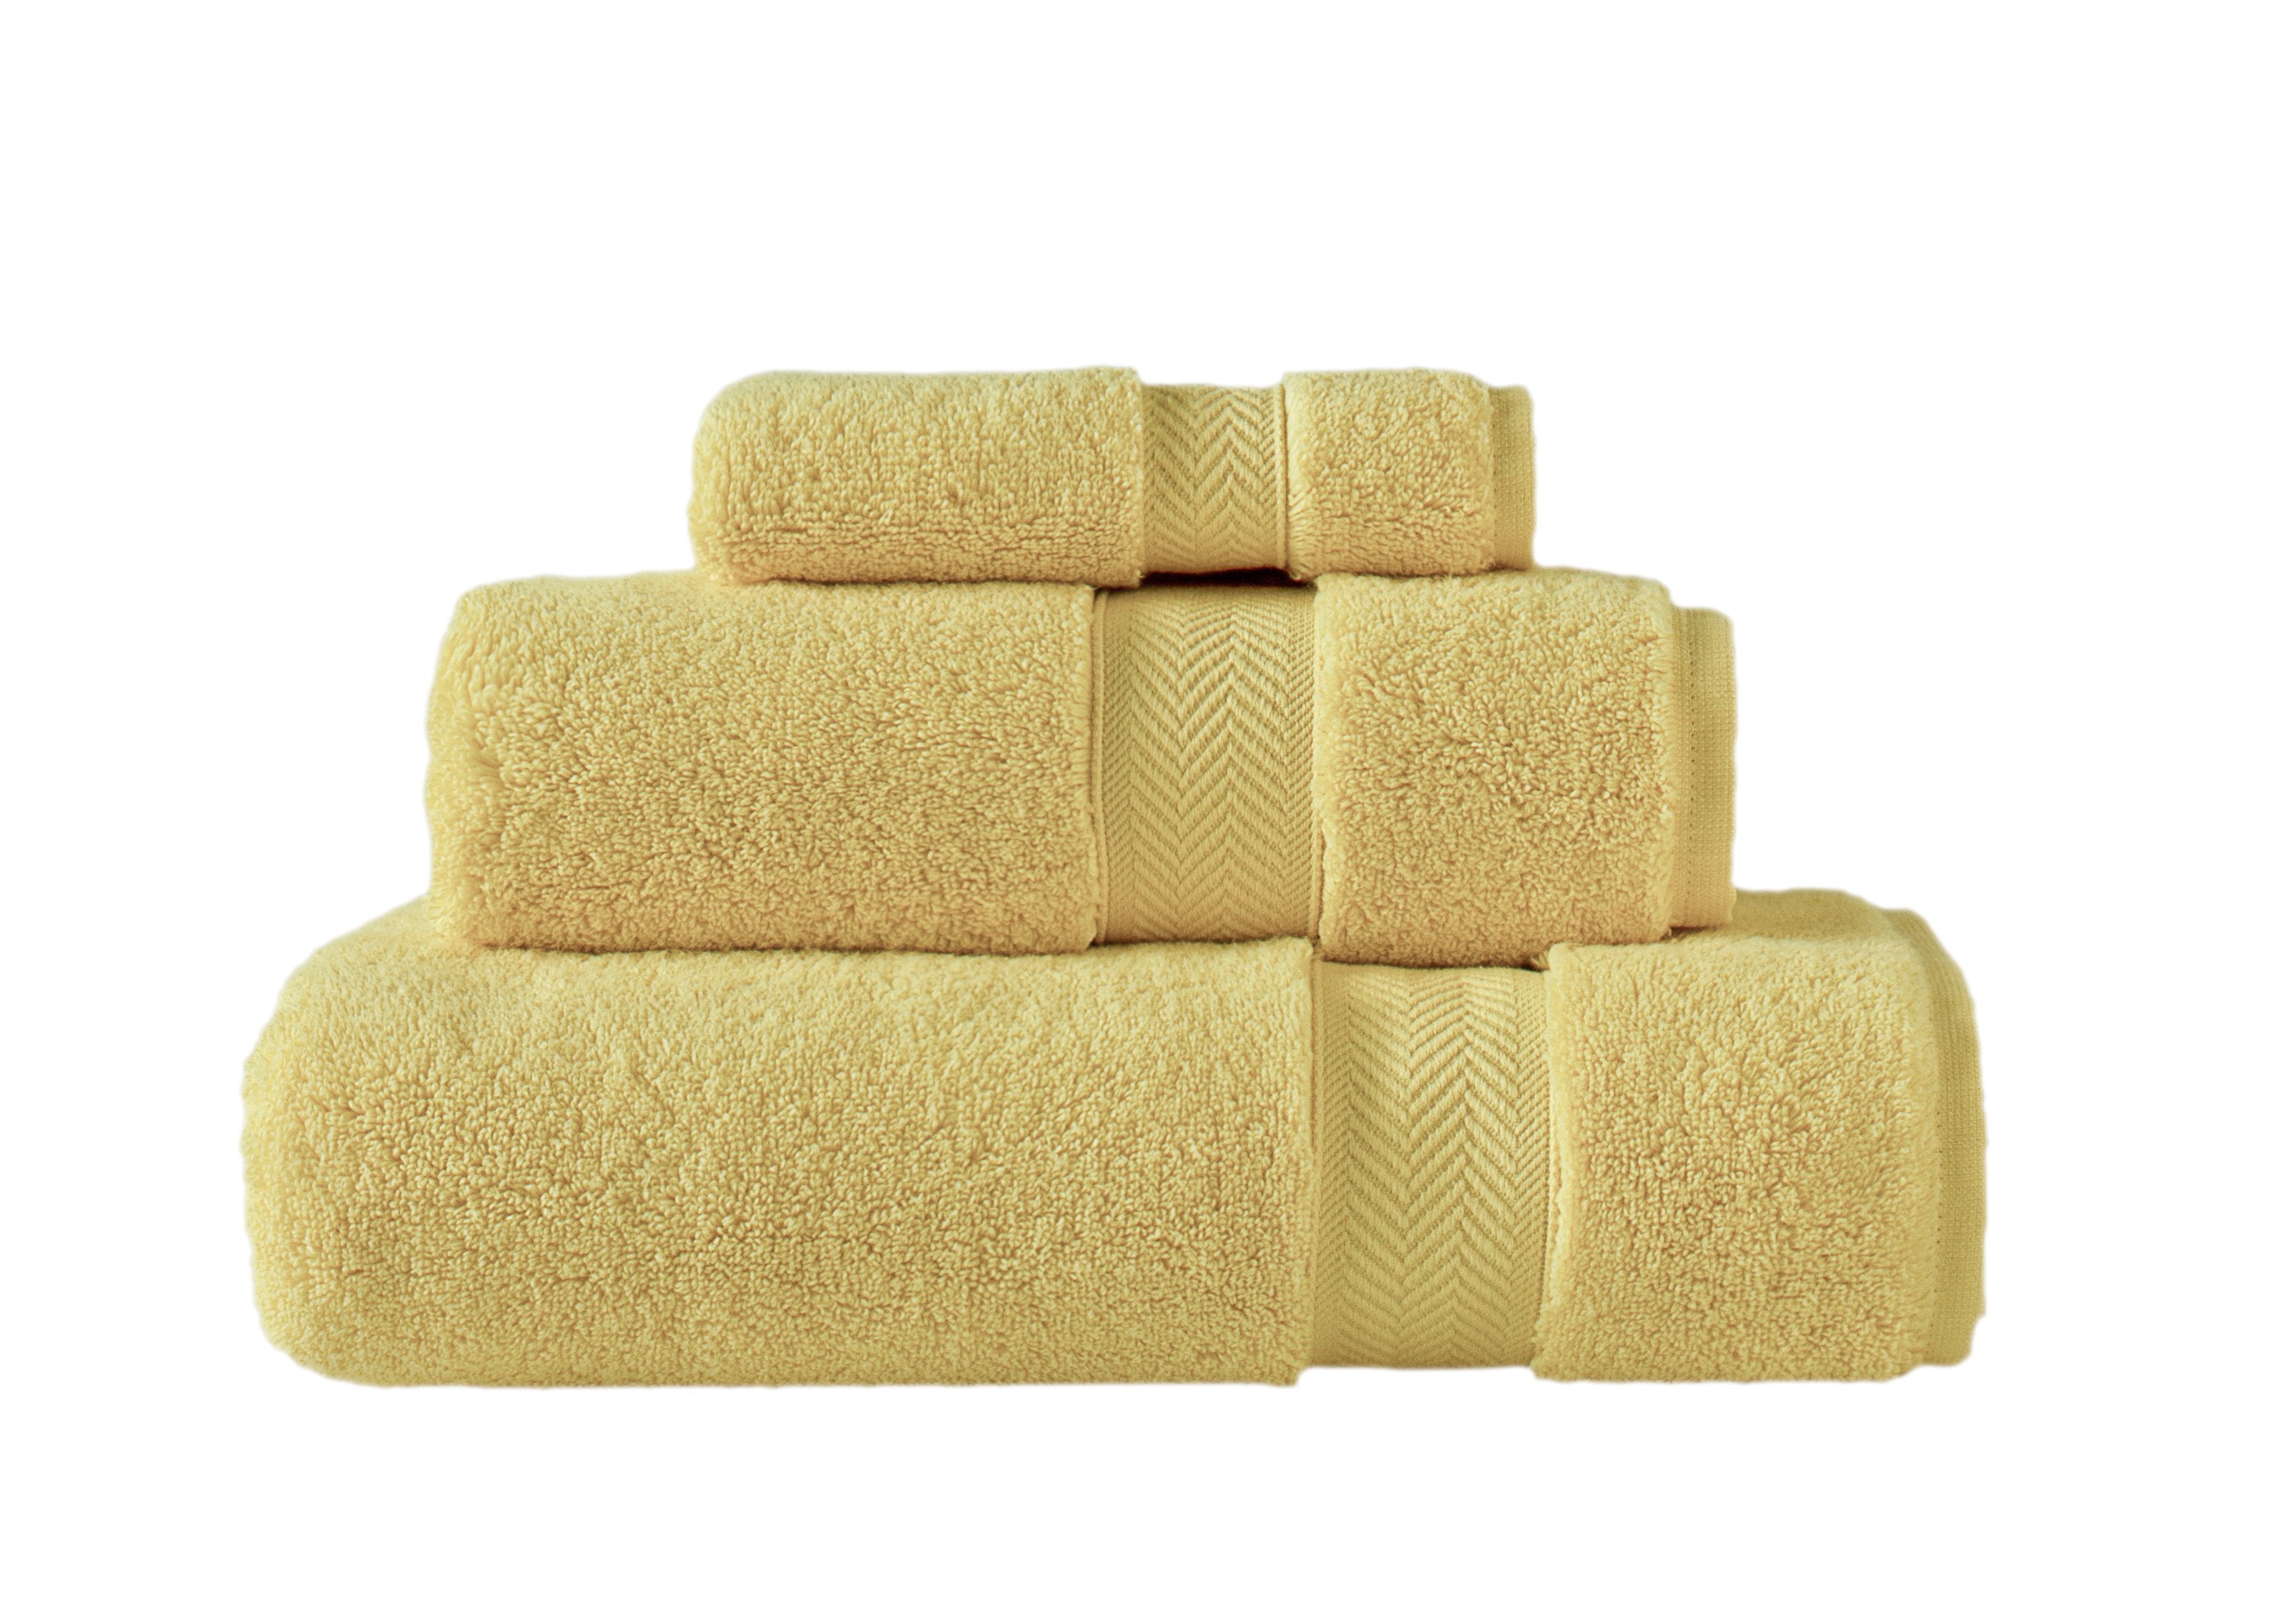 Yellow Bath Towels - Bed Bath & Beyond